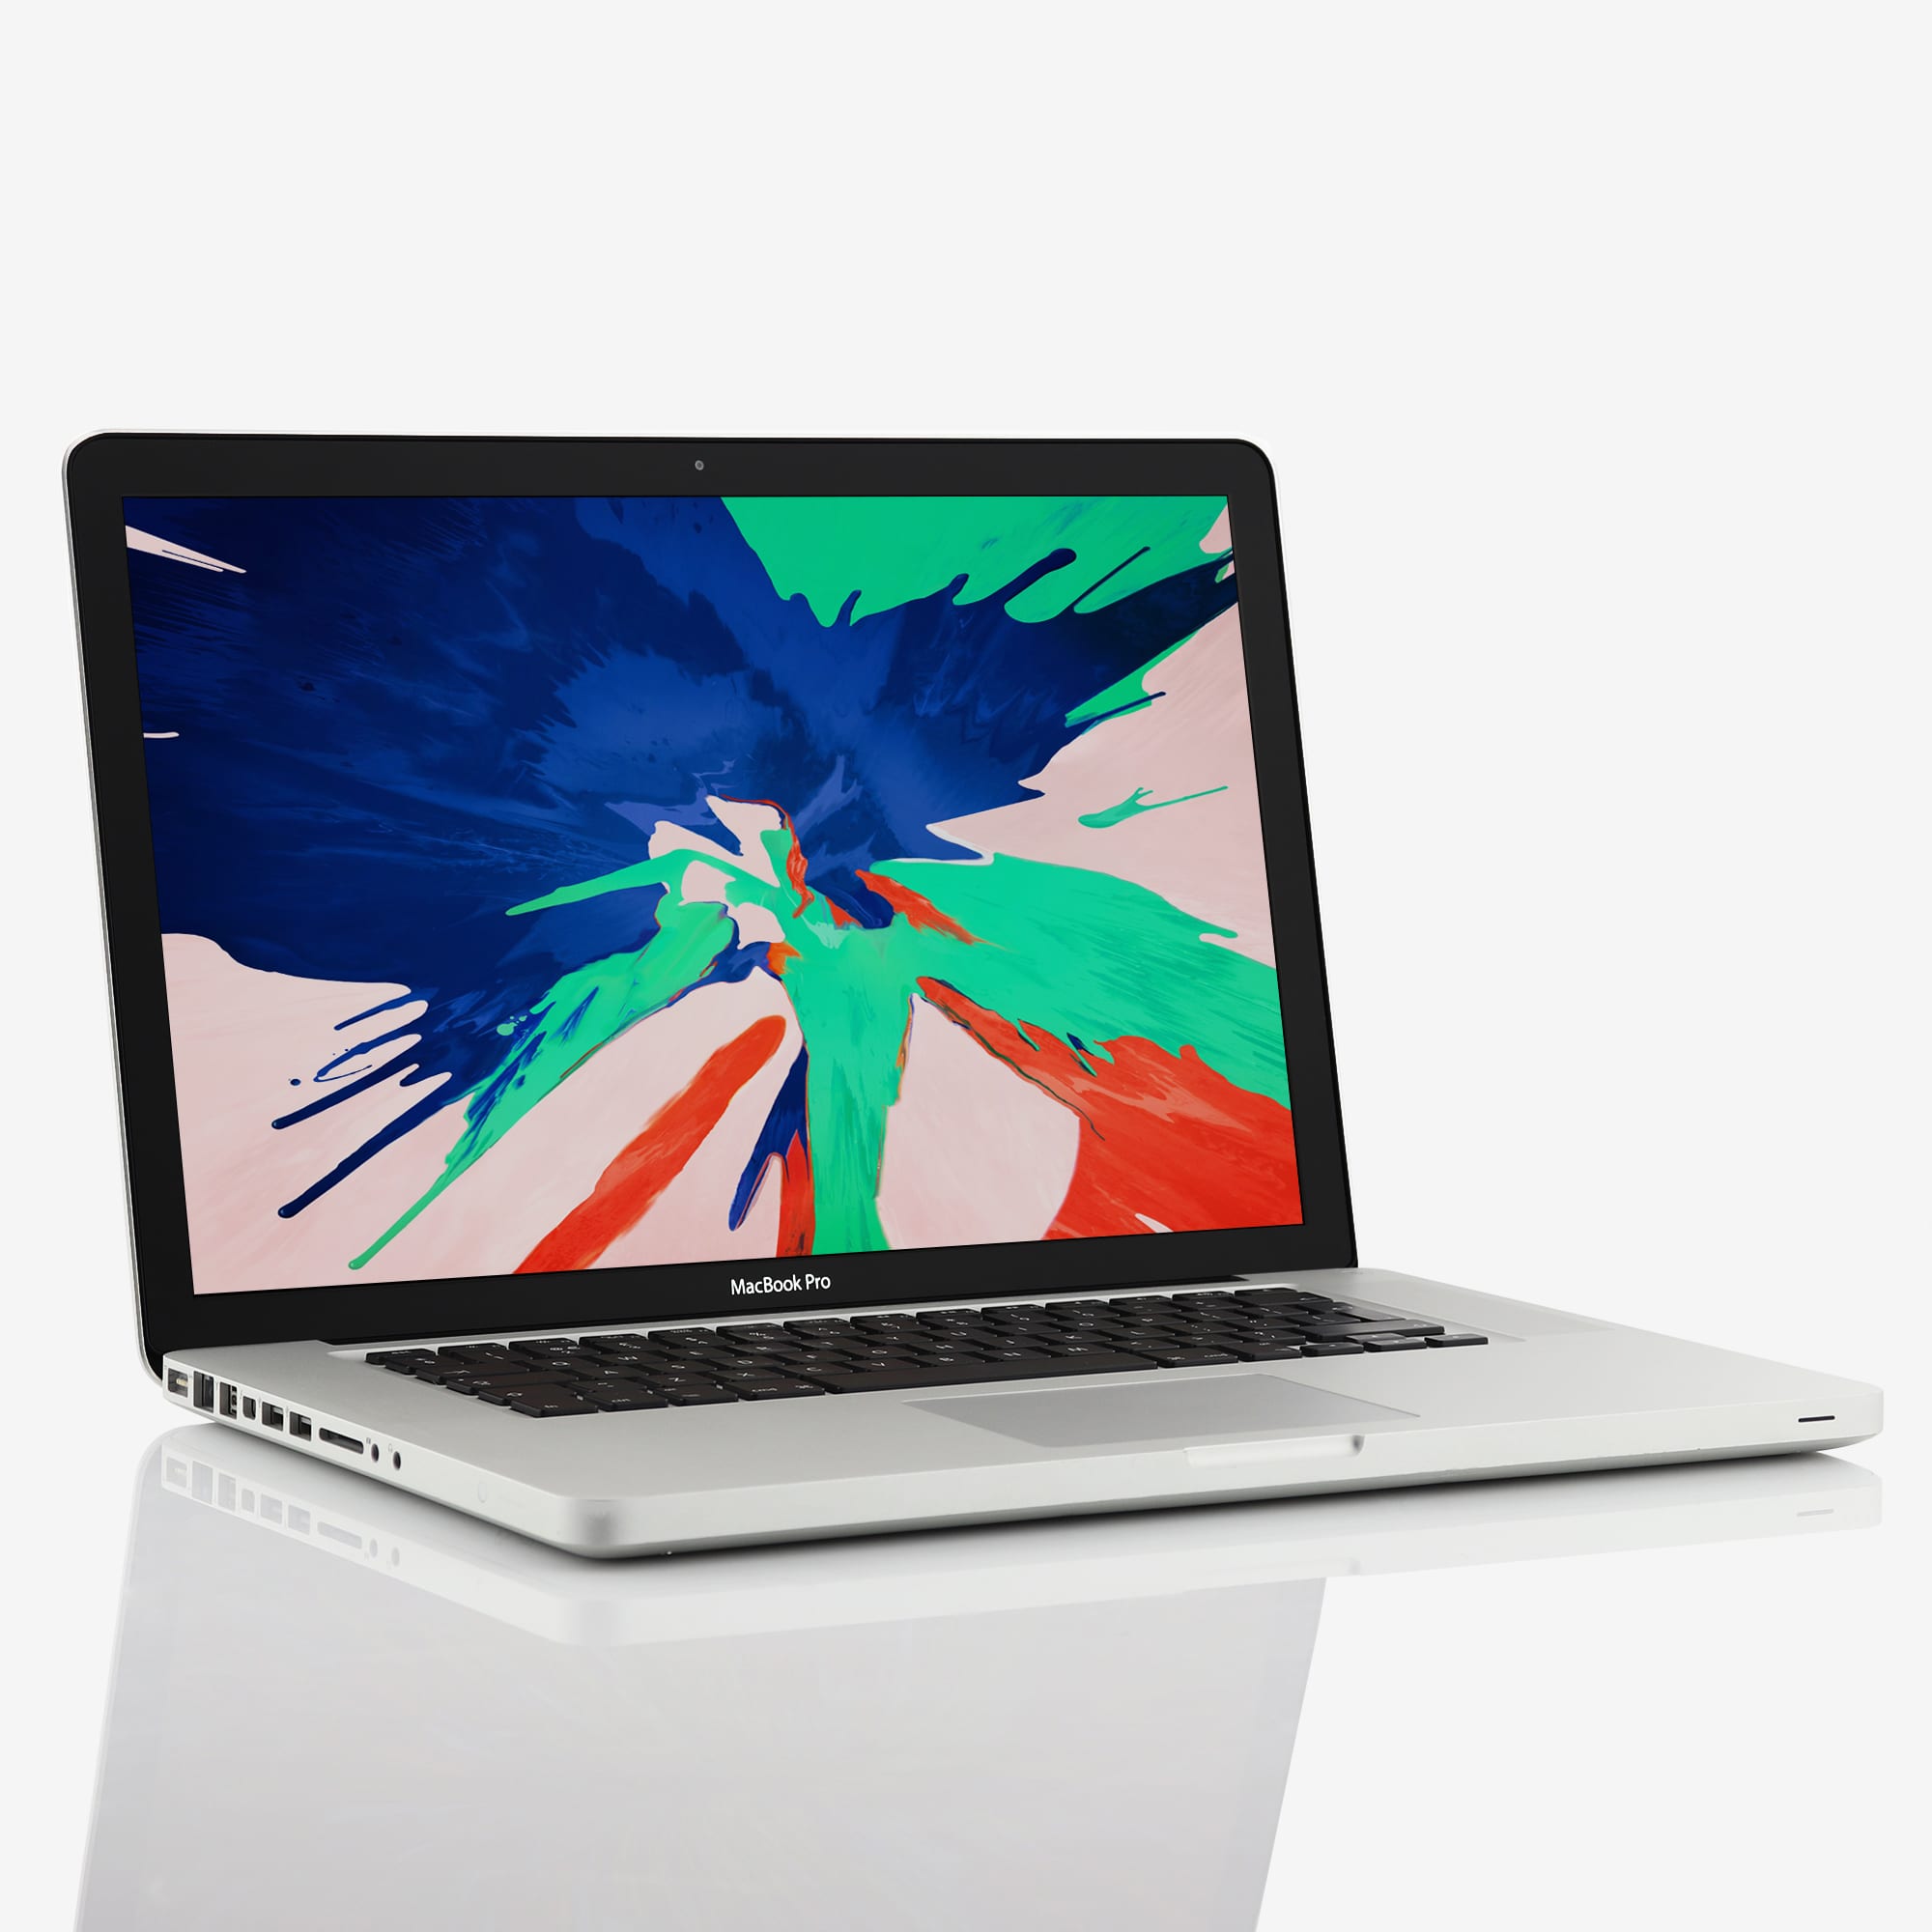 1 x Apple MacBook Pro 15 Inch Intel Core i7 2.30 GHz (2012)